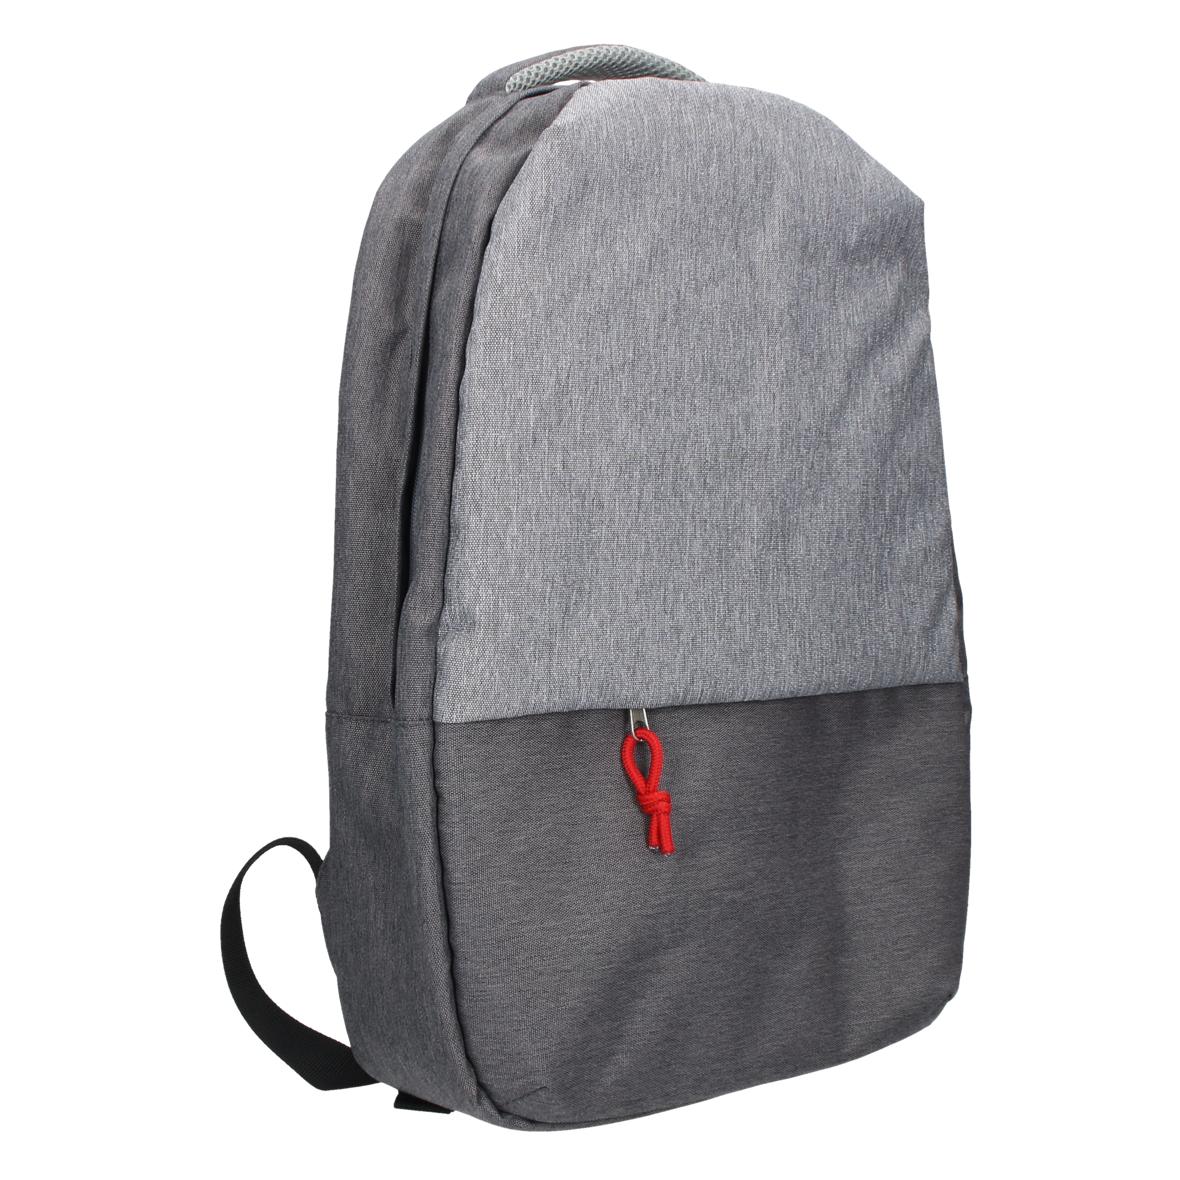 Stylish 2-Colour Multi-Compartment Backpack - Bedlington